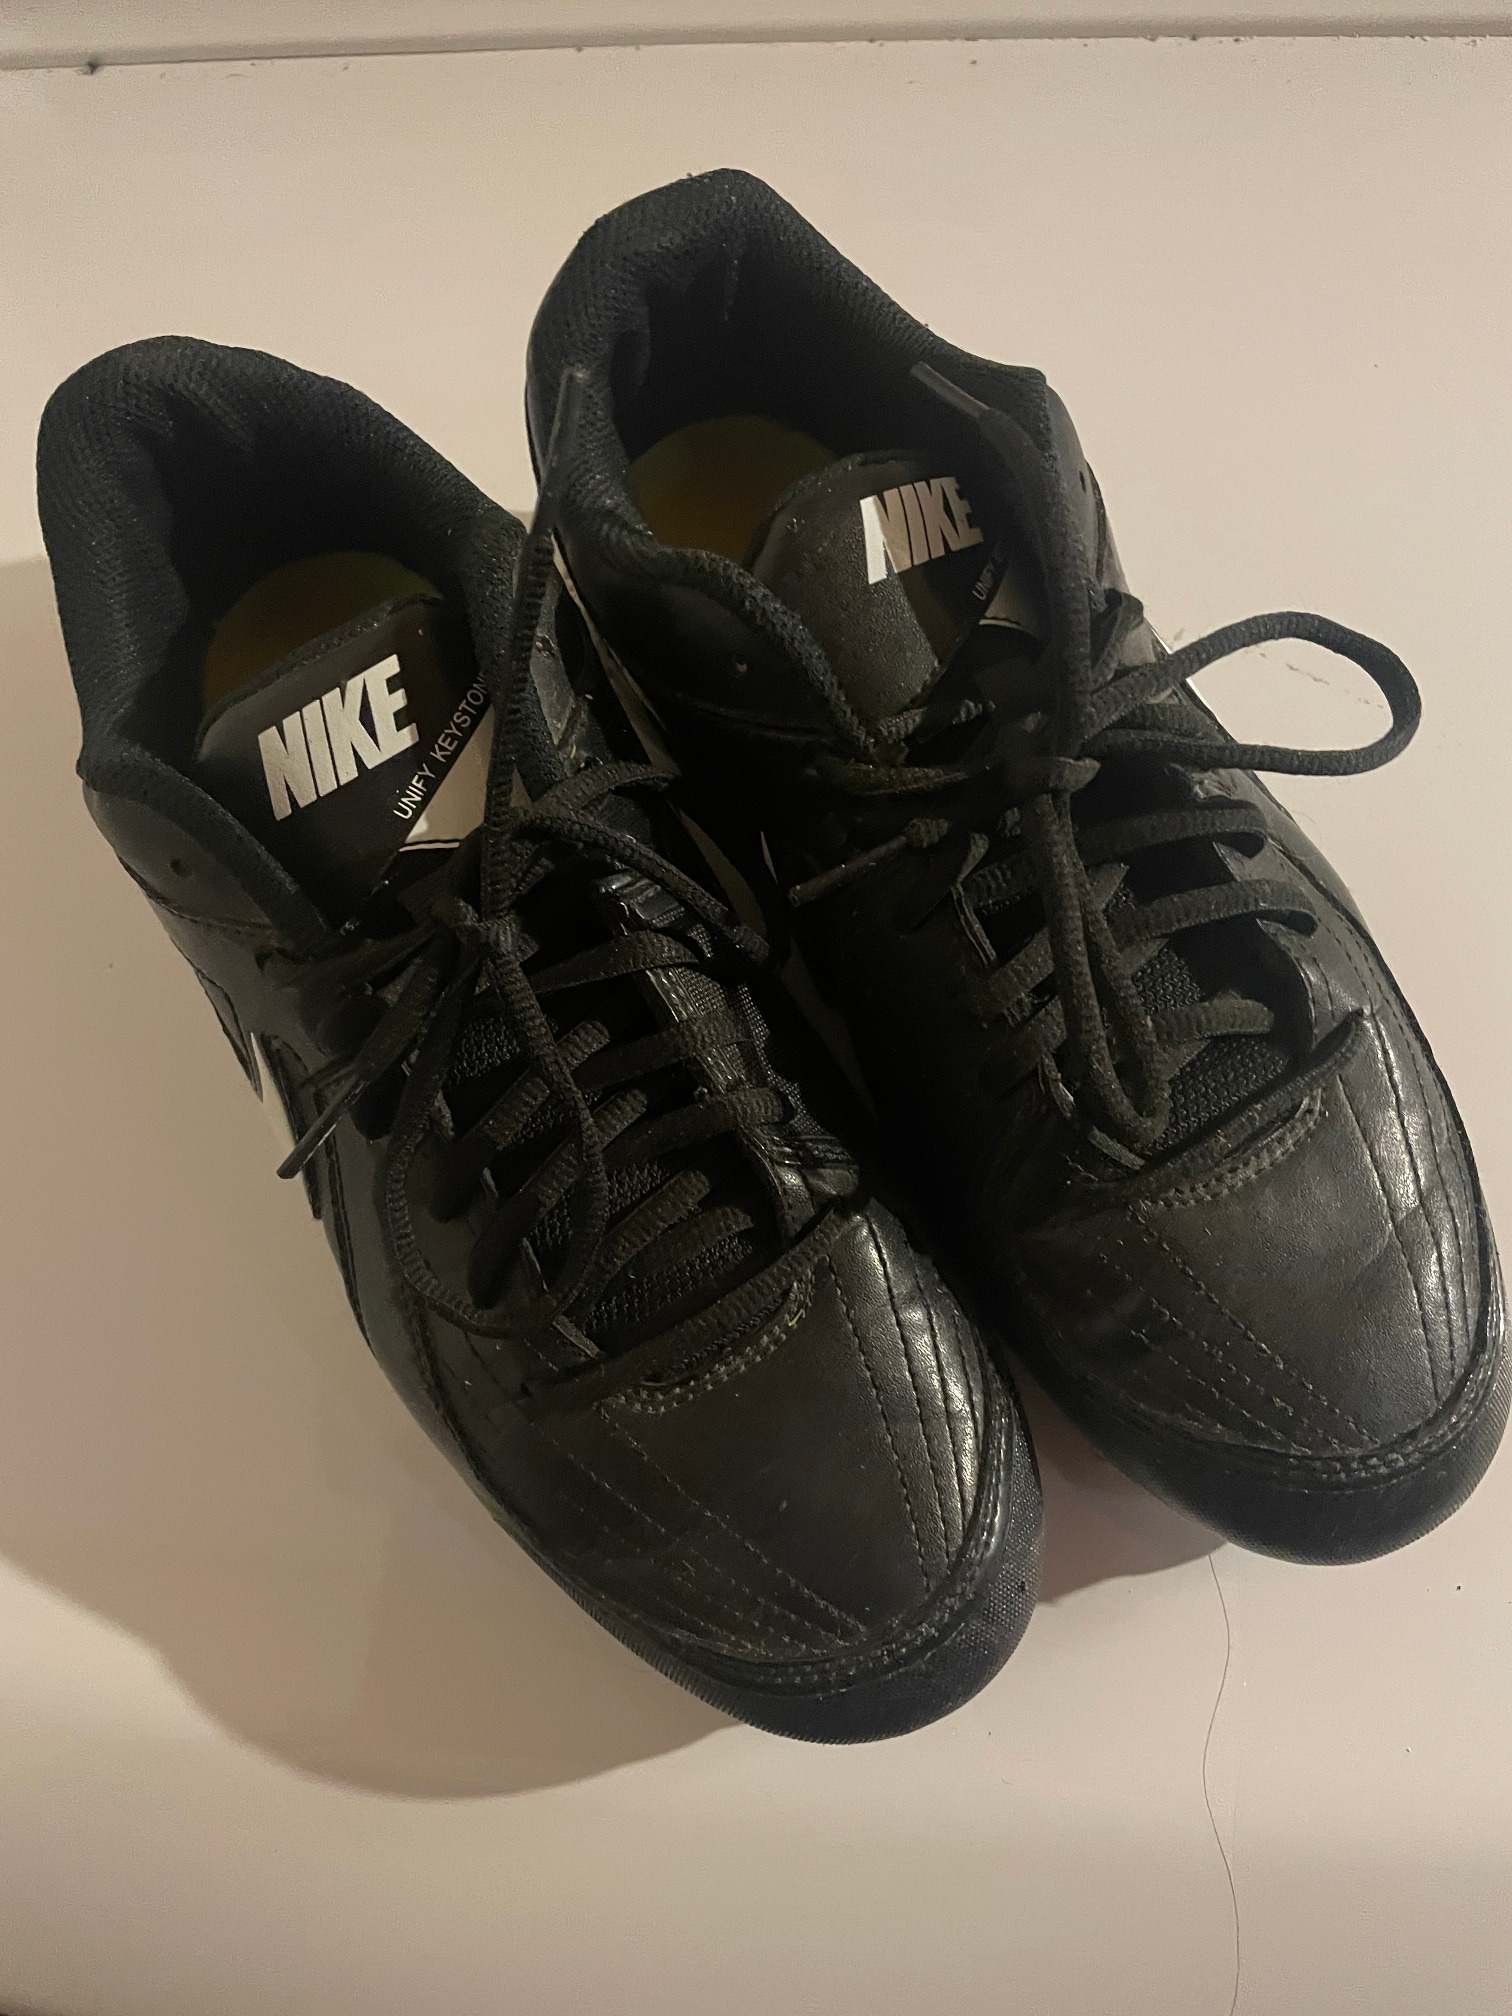 Nike Molded Softball Size 8.5 / 9.5  Cleats